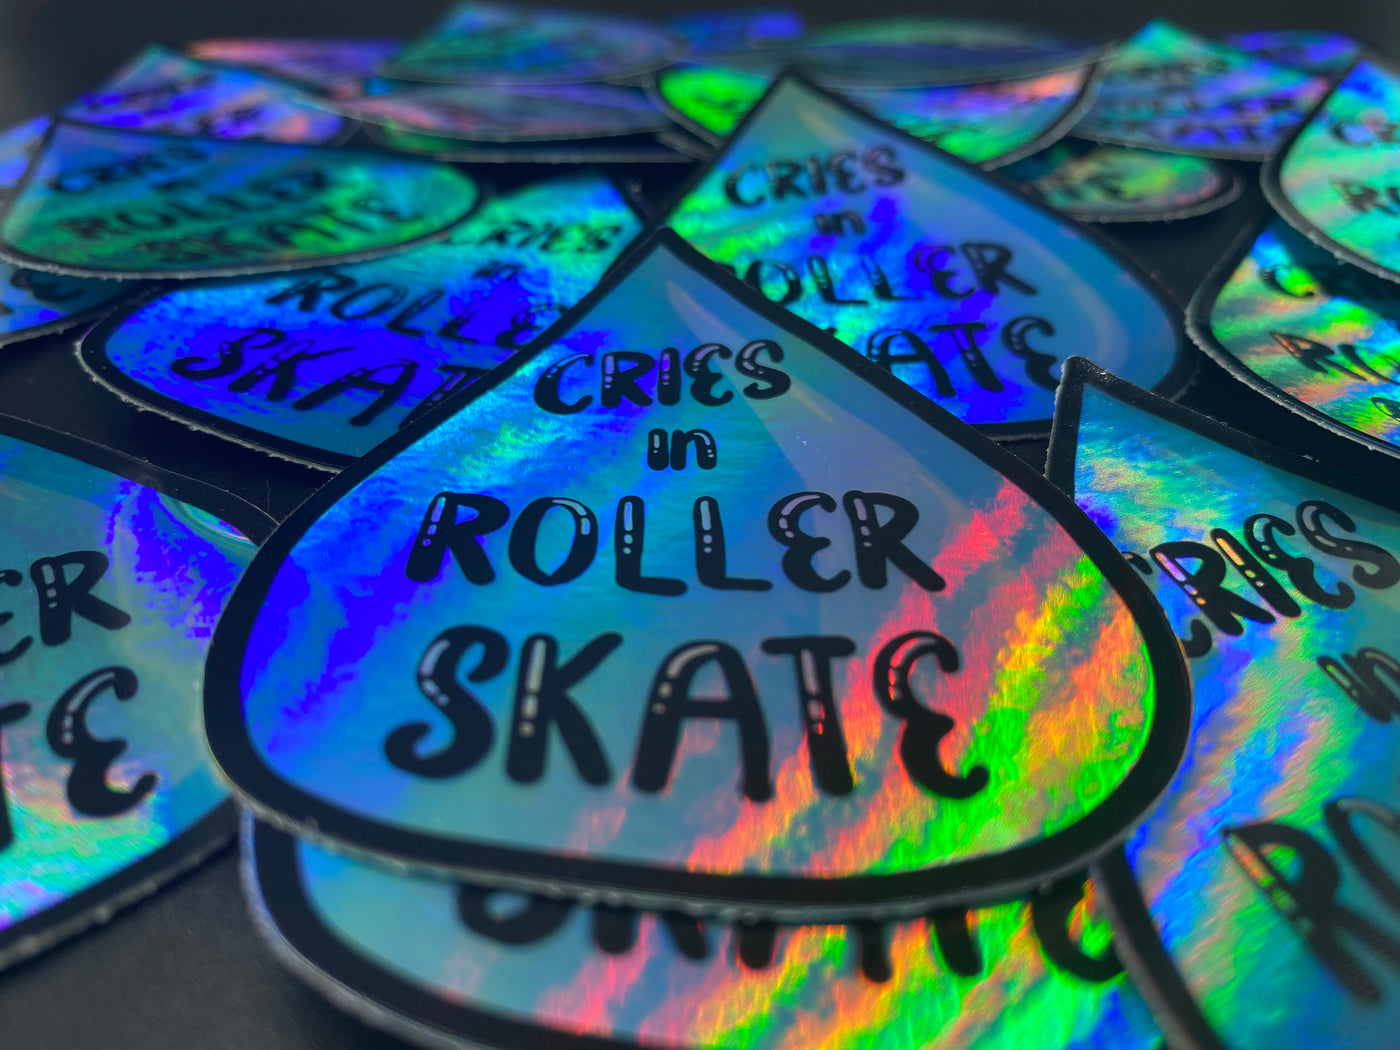 Cries in Roller Skate HOLO sticker!